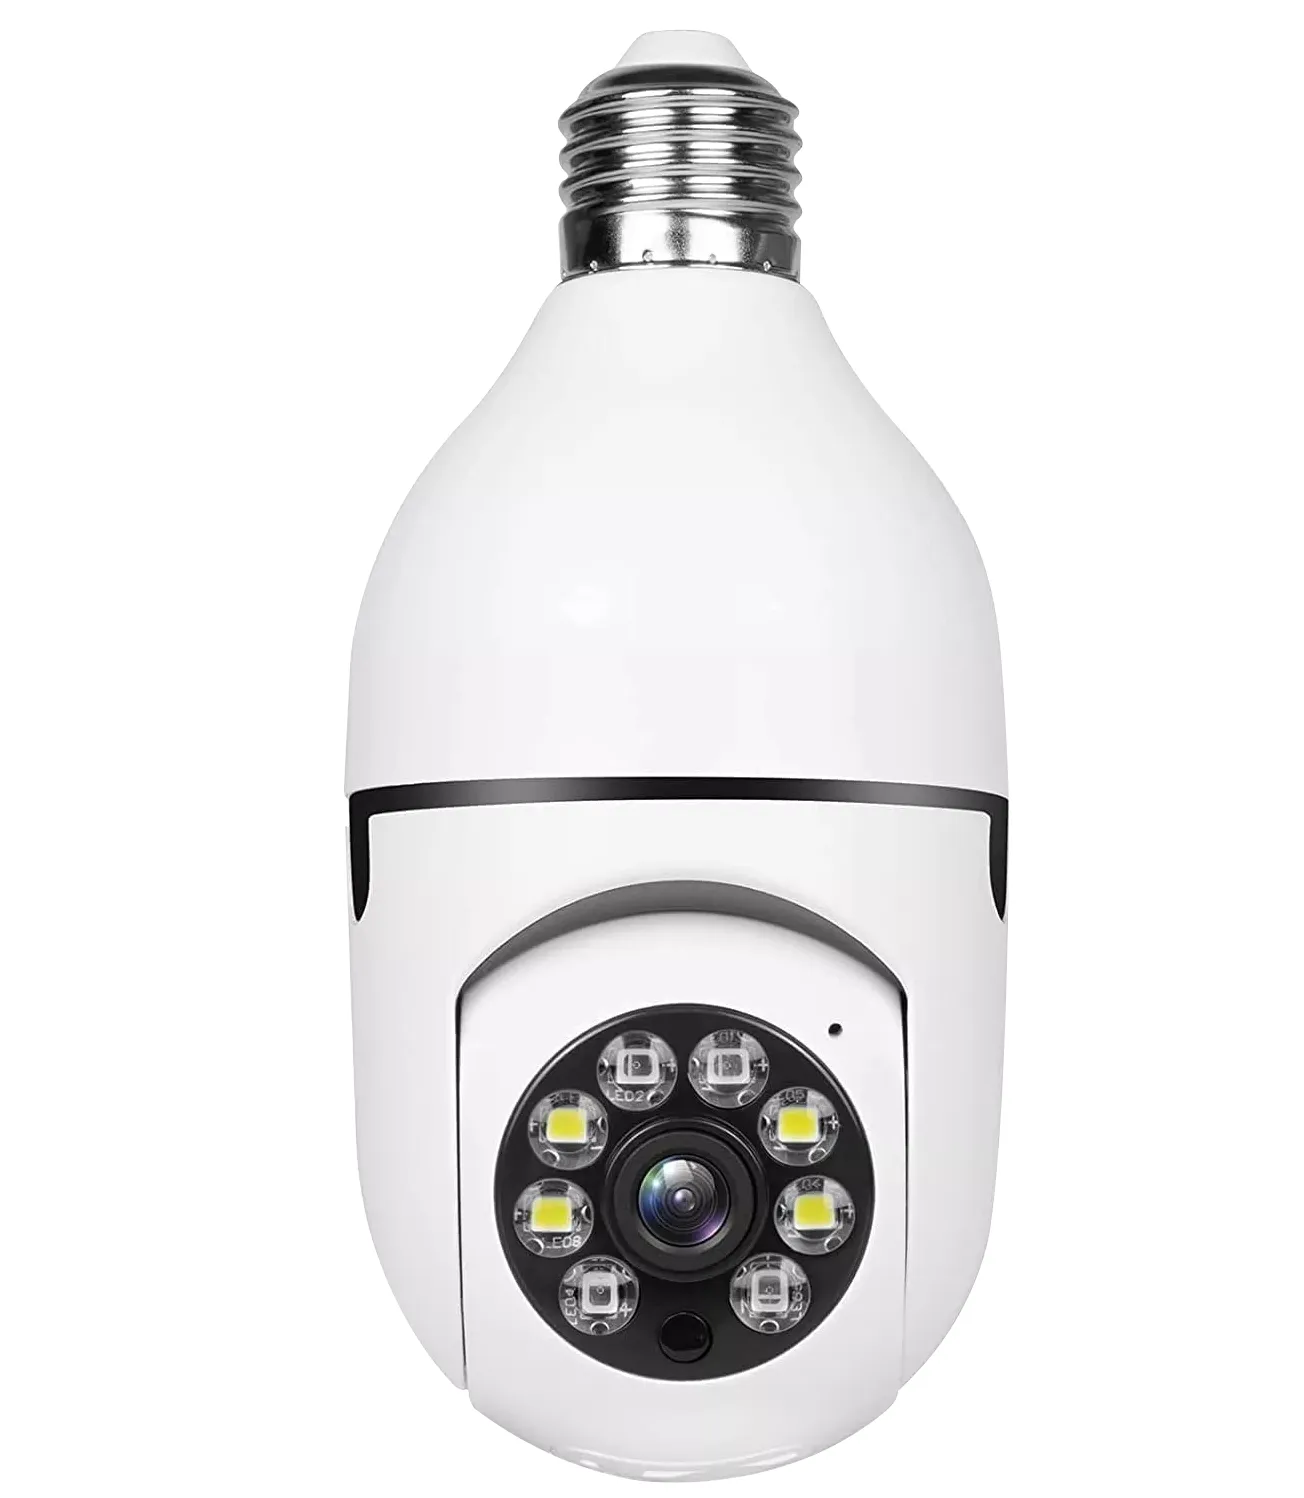 A6 Light Bulb Camera Wireless 1080p 360 درجة بانورامية ذكية HD WiFi Cam Night Amurity Security IP Surveillance CCTV LED Holder Camera مع صندوق البيع بالتجزئة